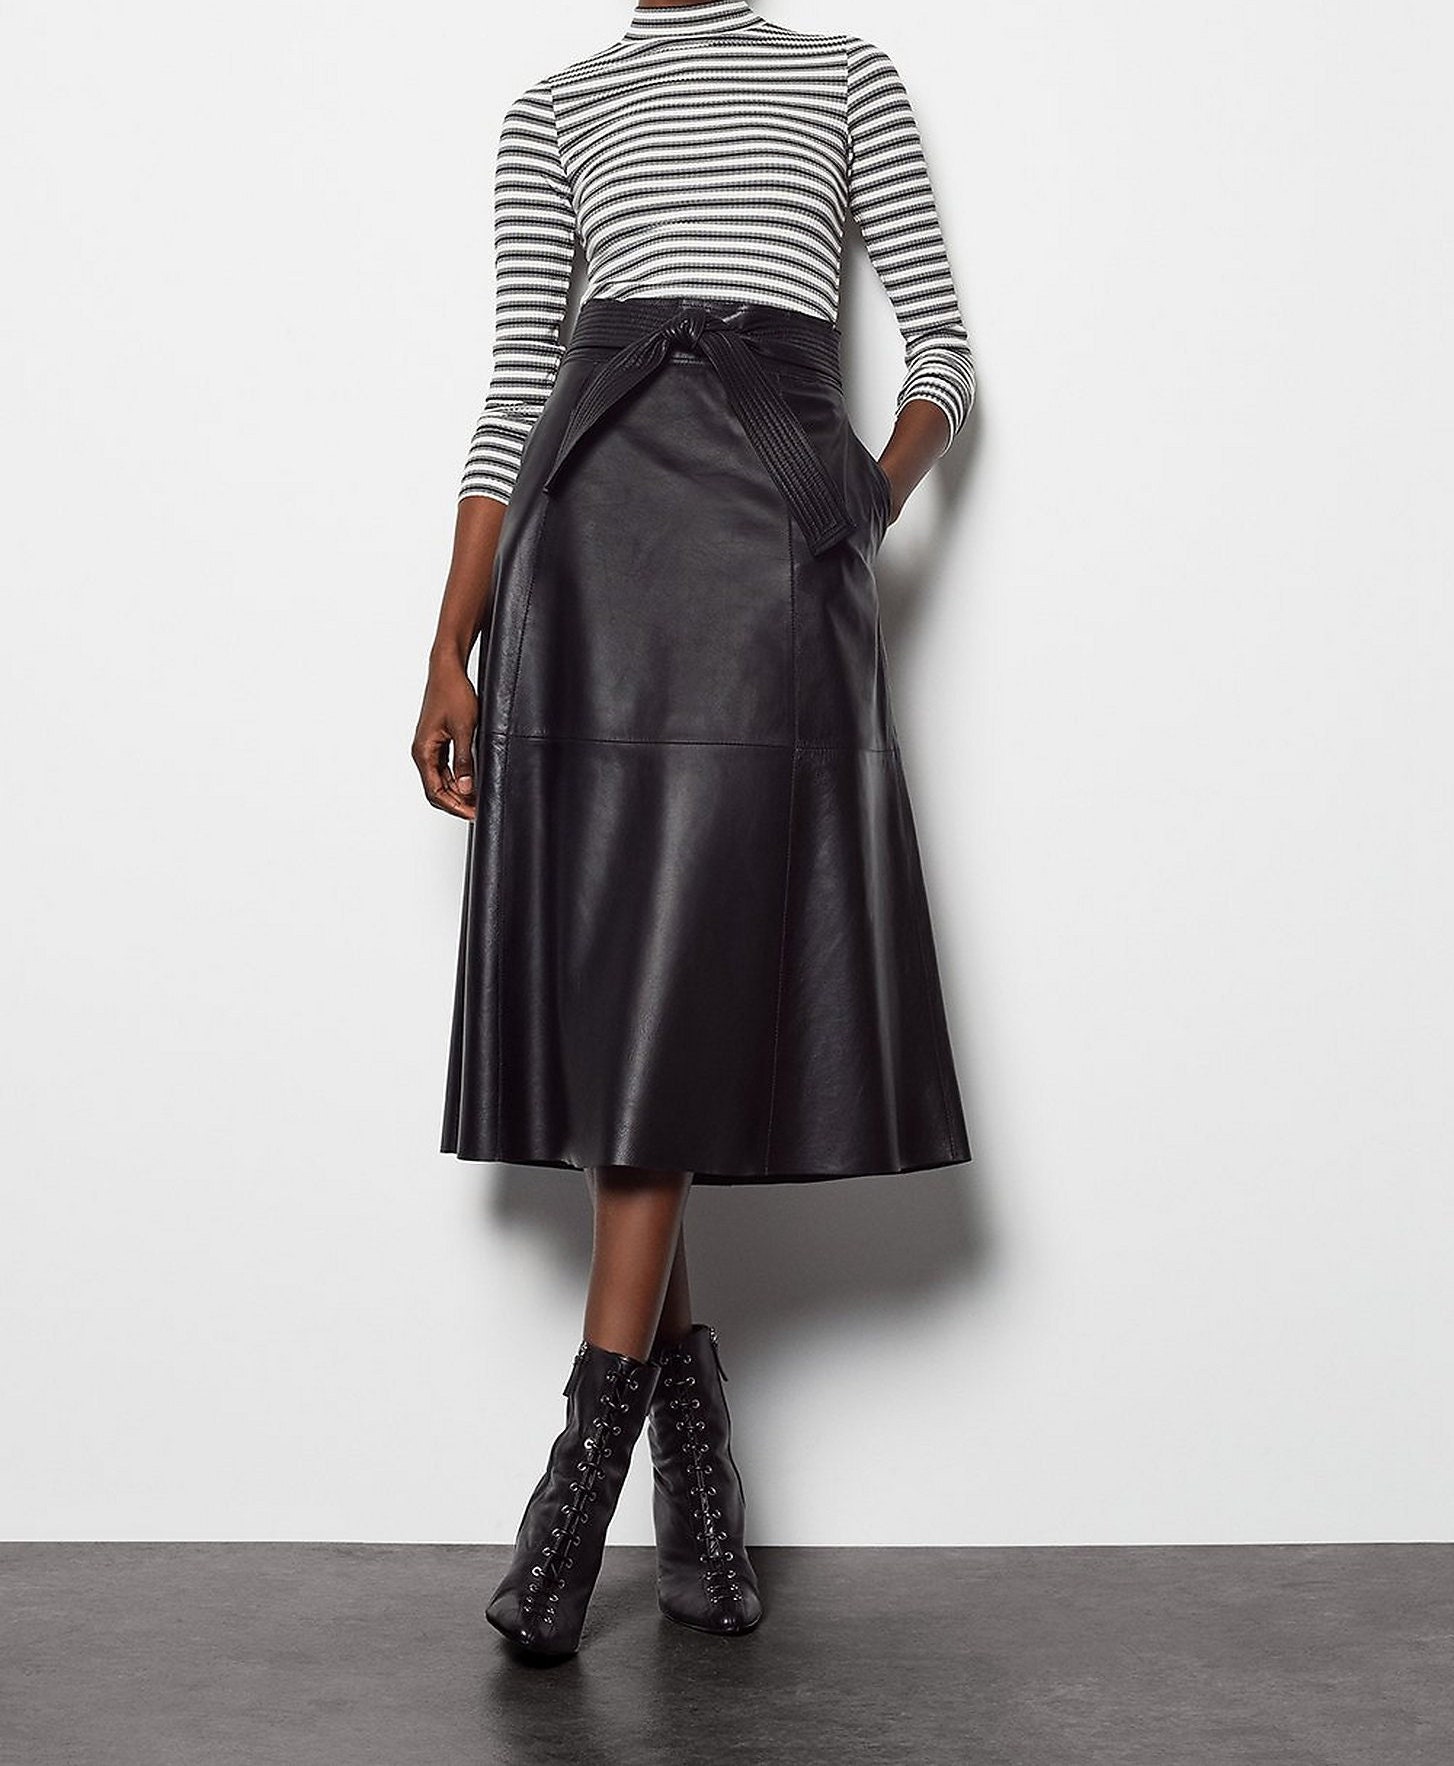 Handmade Women's Genuine Lambskin Leather Skirt Outfit - Etsy